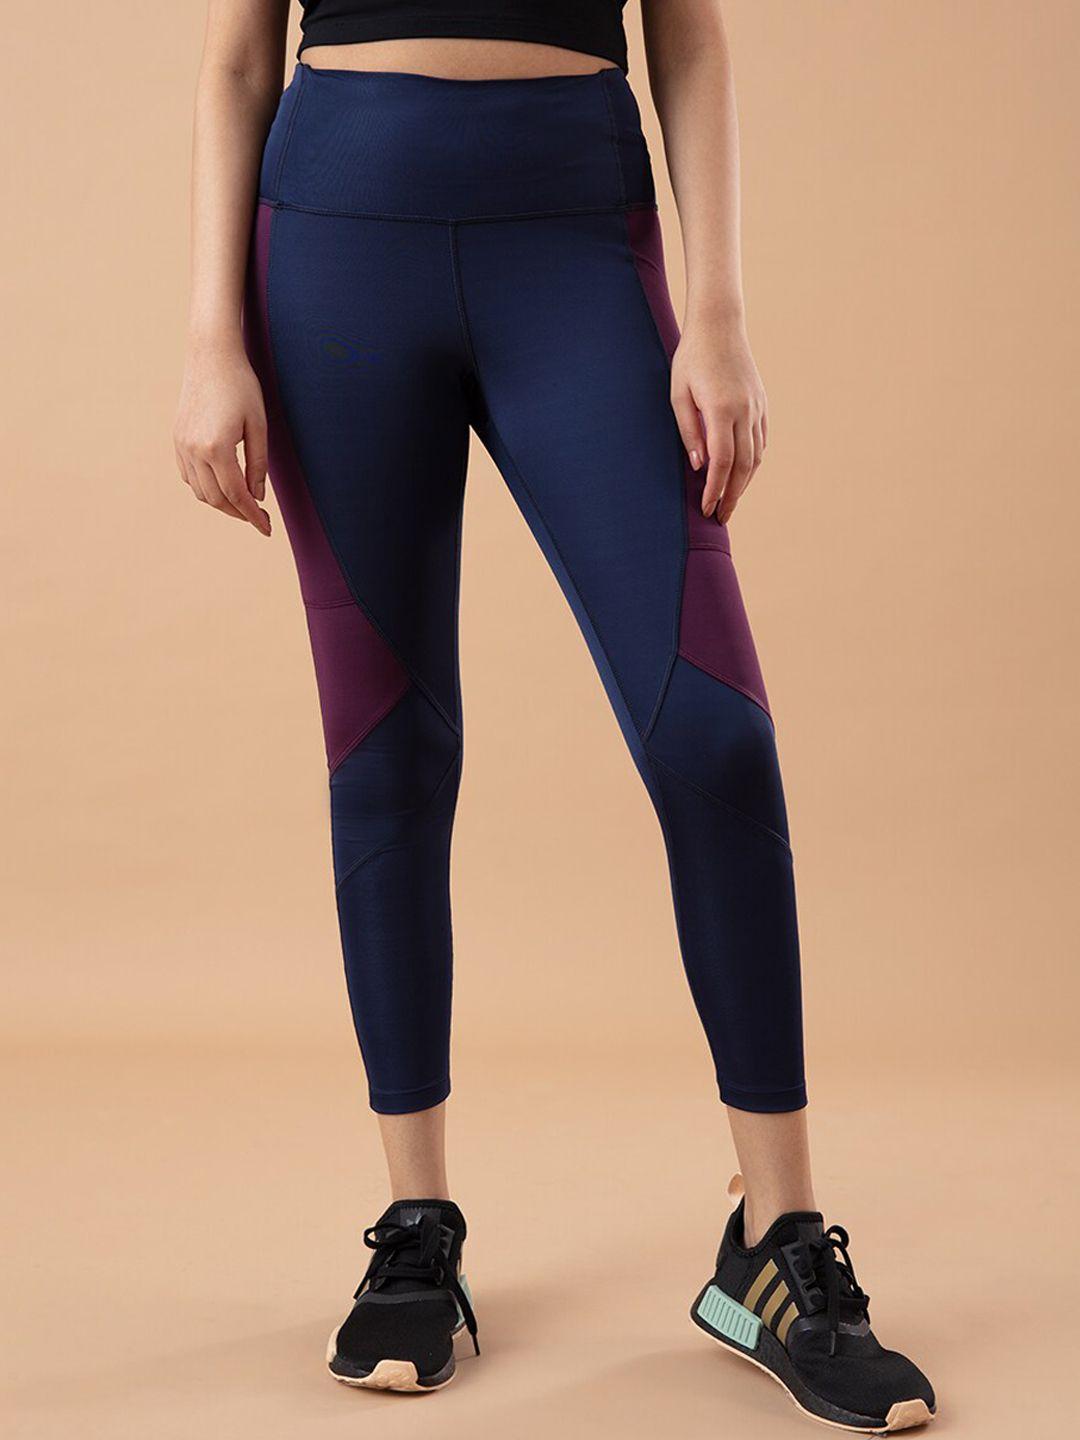 nykd women navy blue & purple colourblocked gym tights